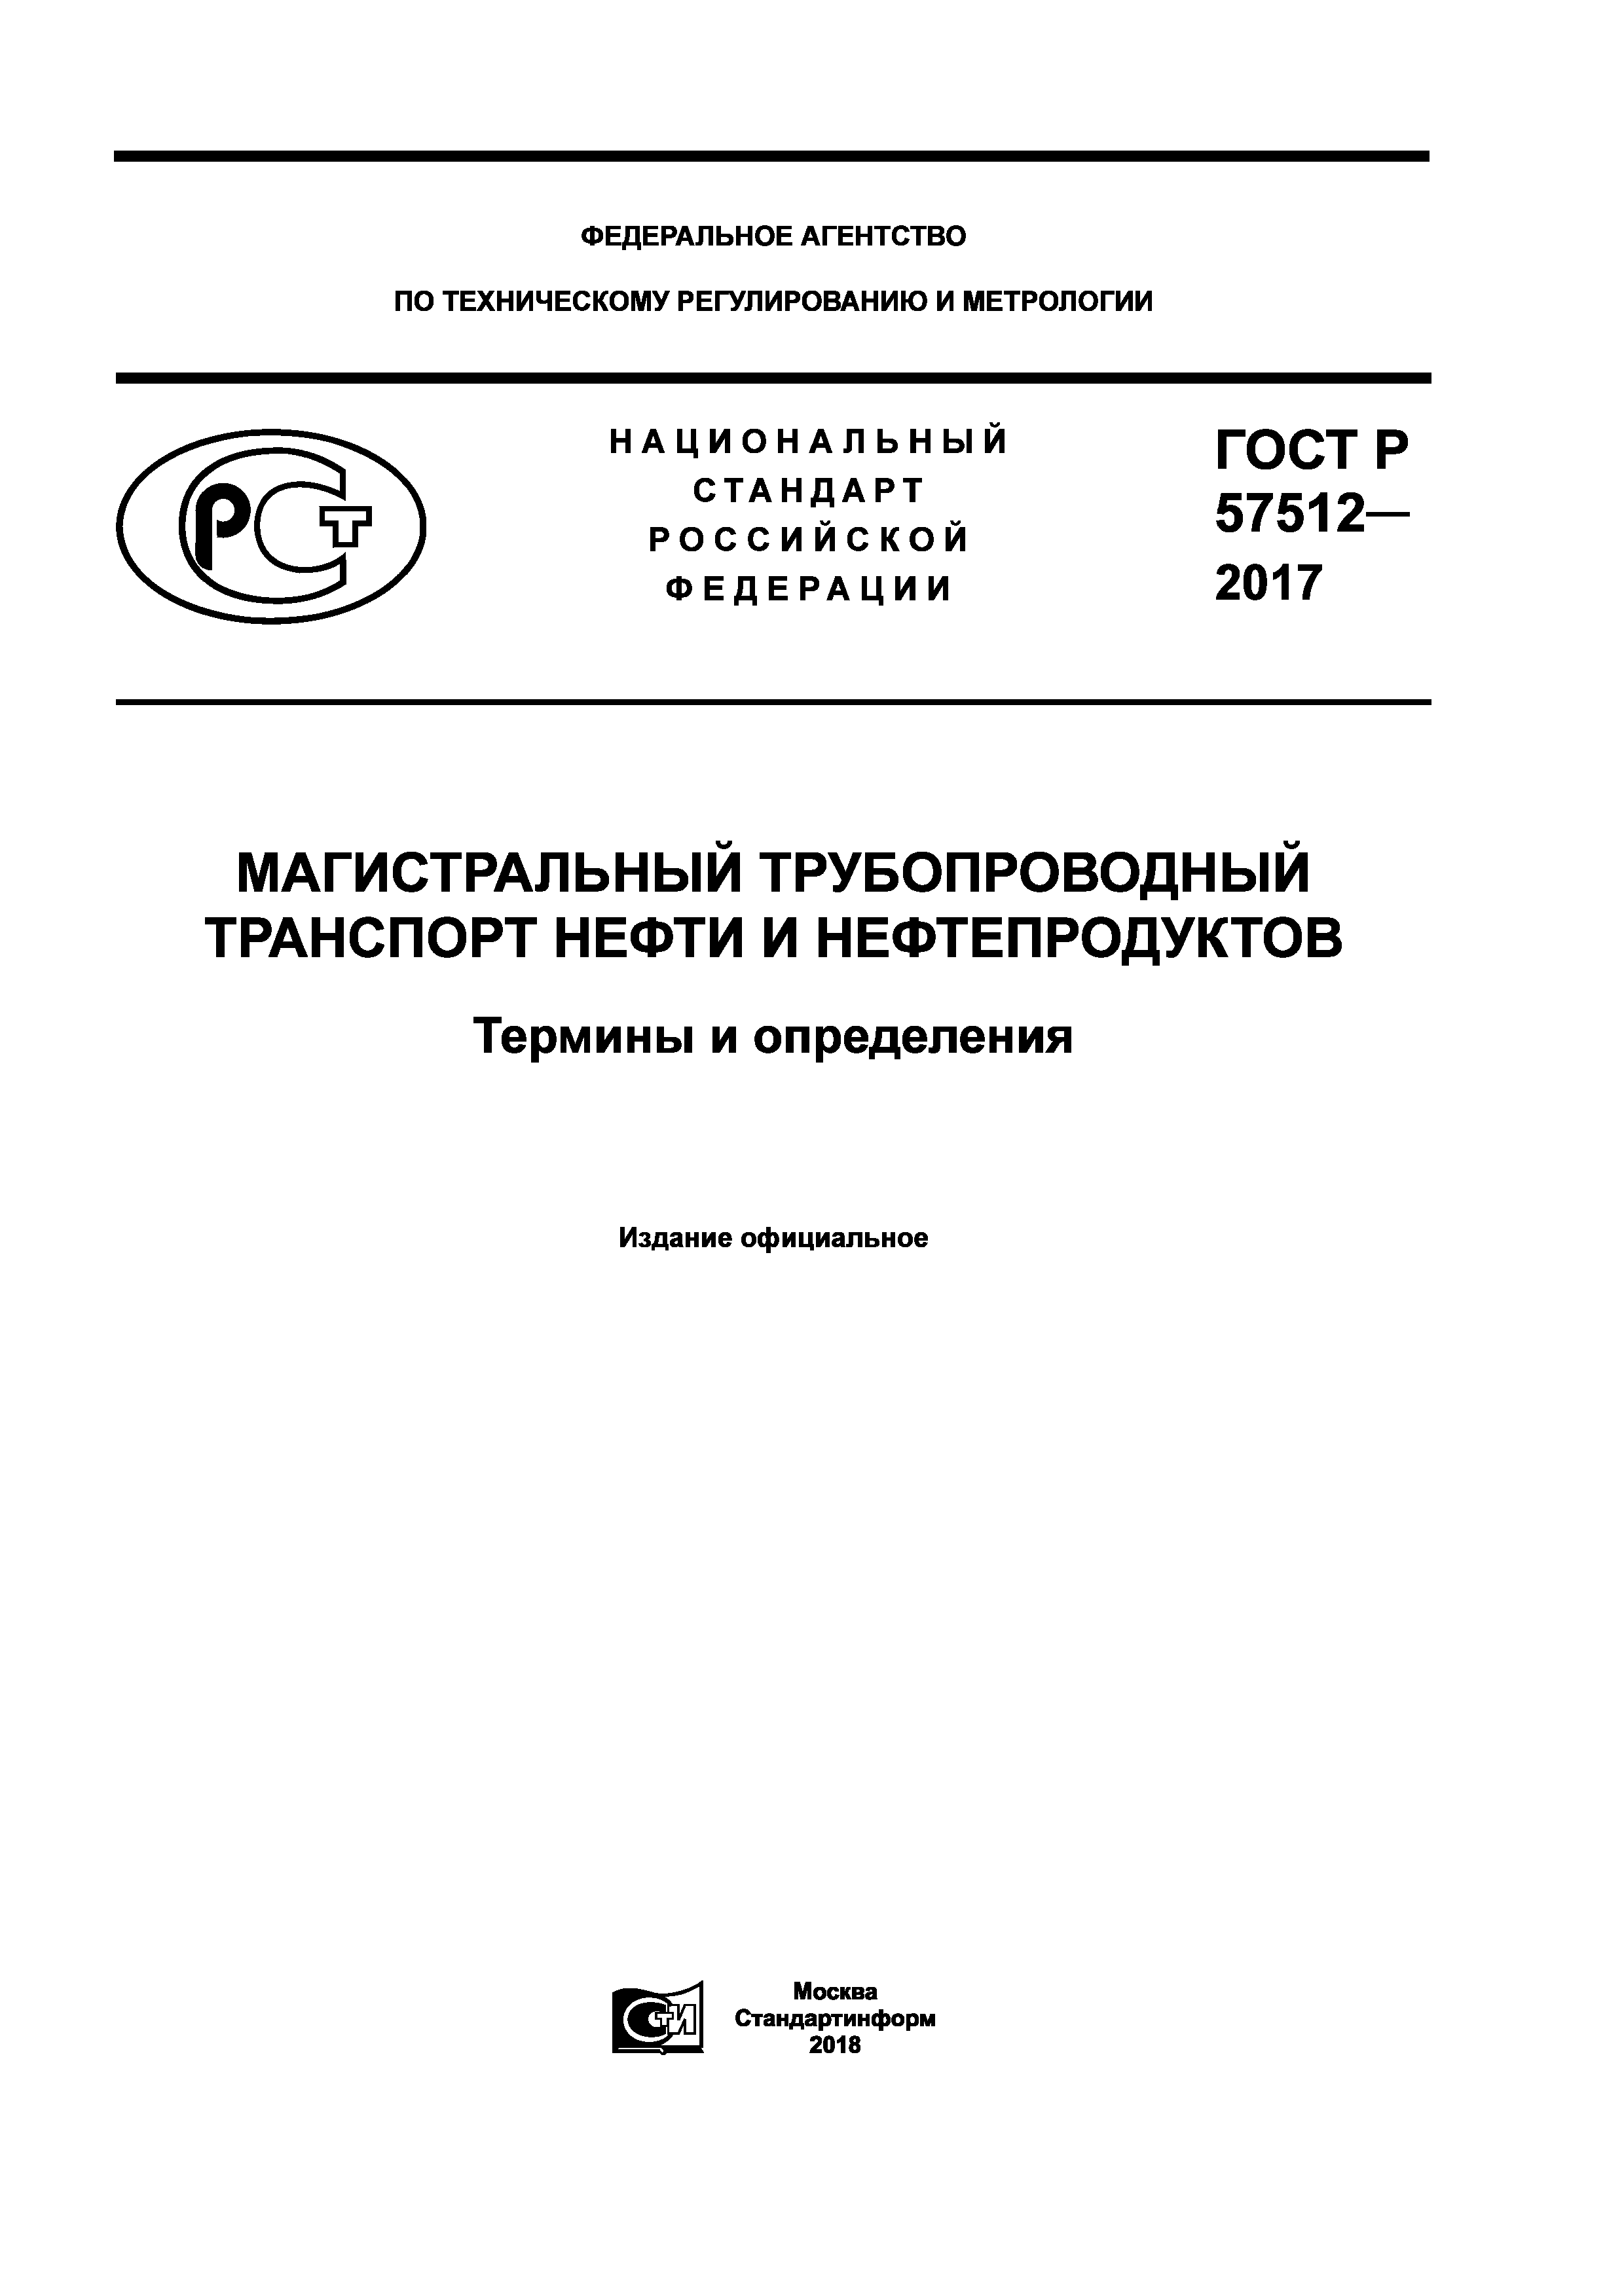 ГОСТ Р 57512-2017